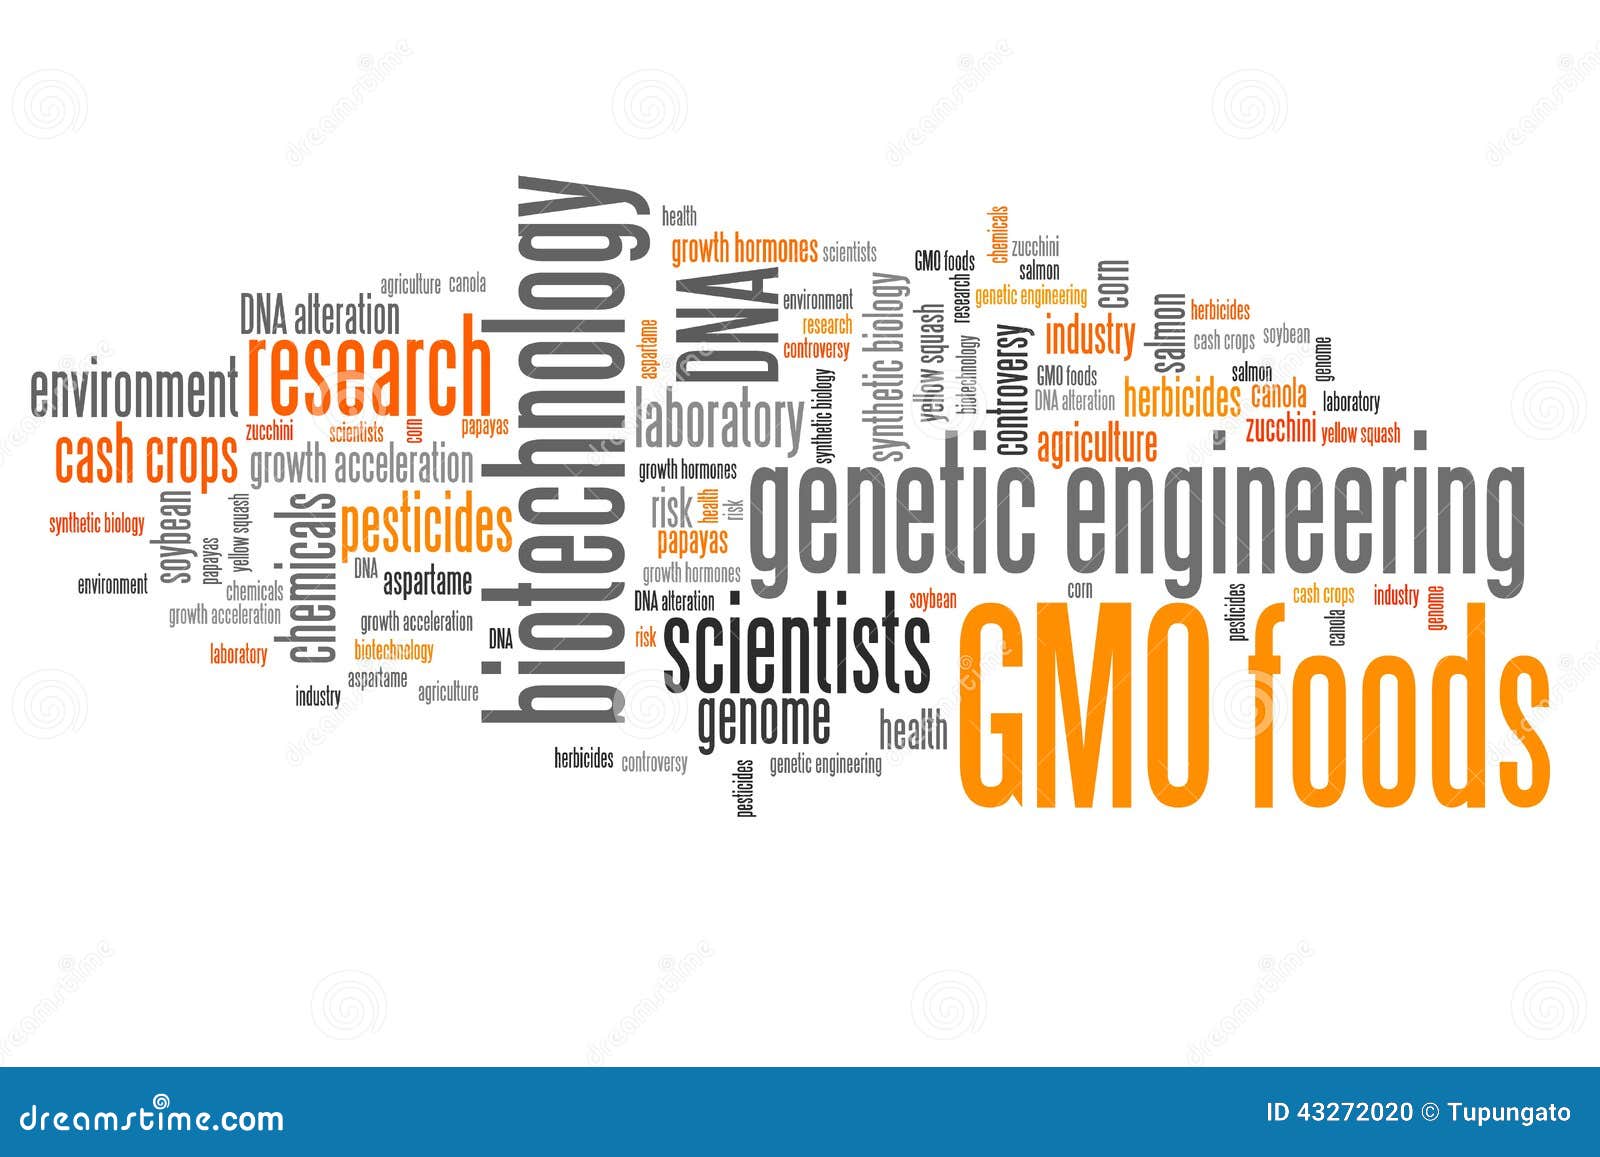 Essay on genetic engineering in food production